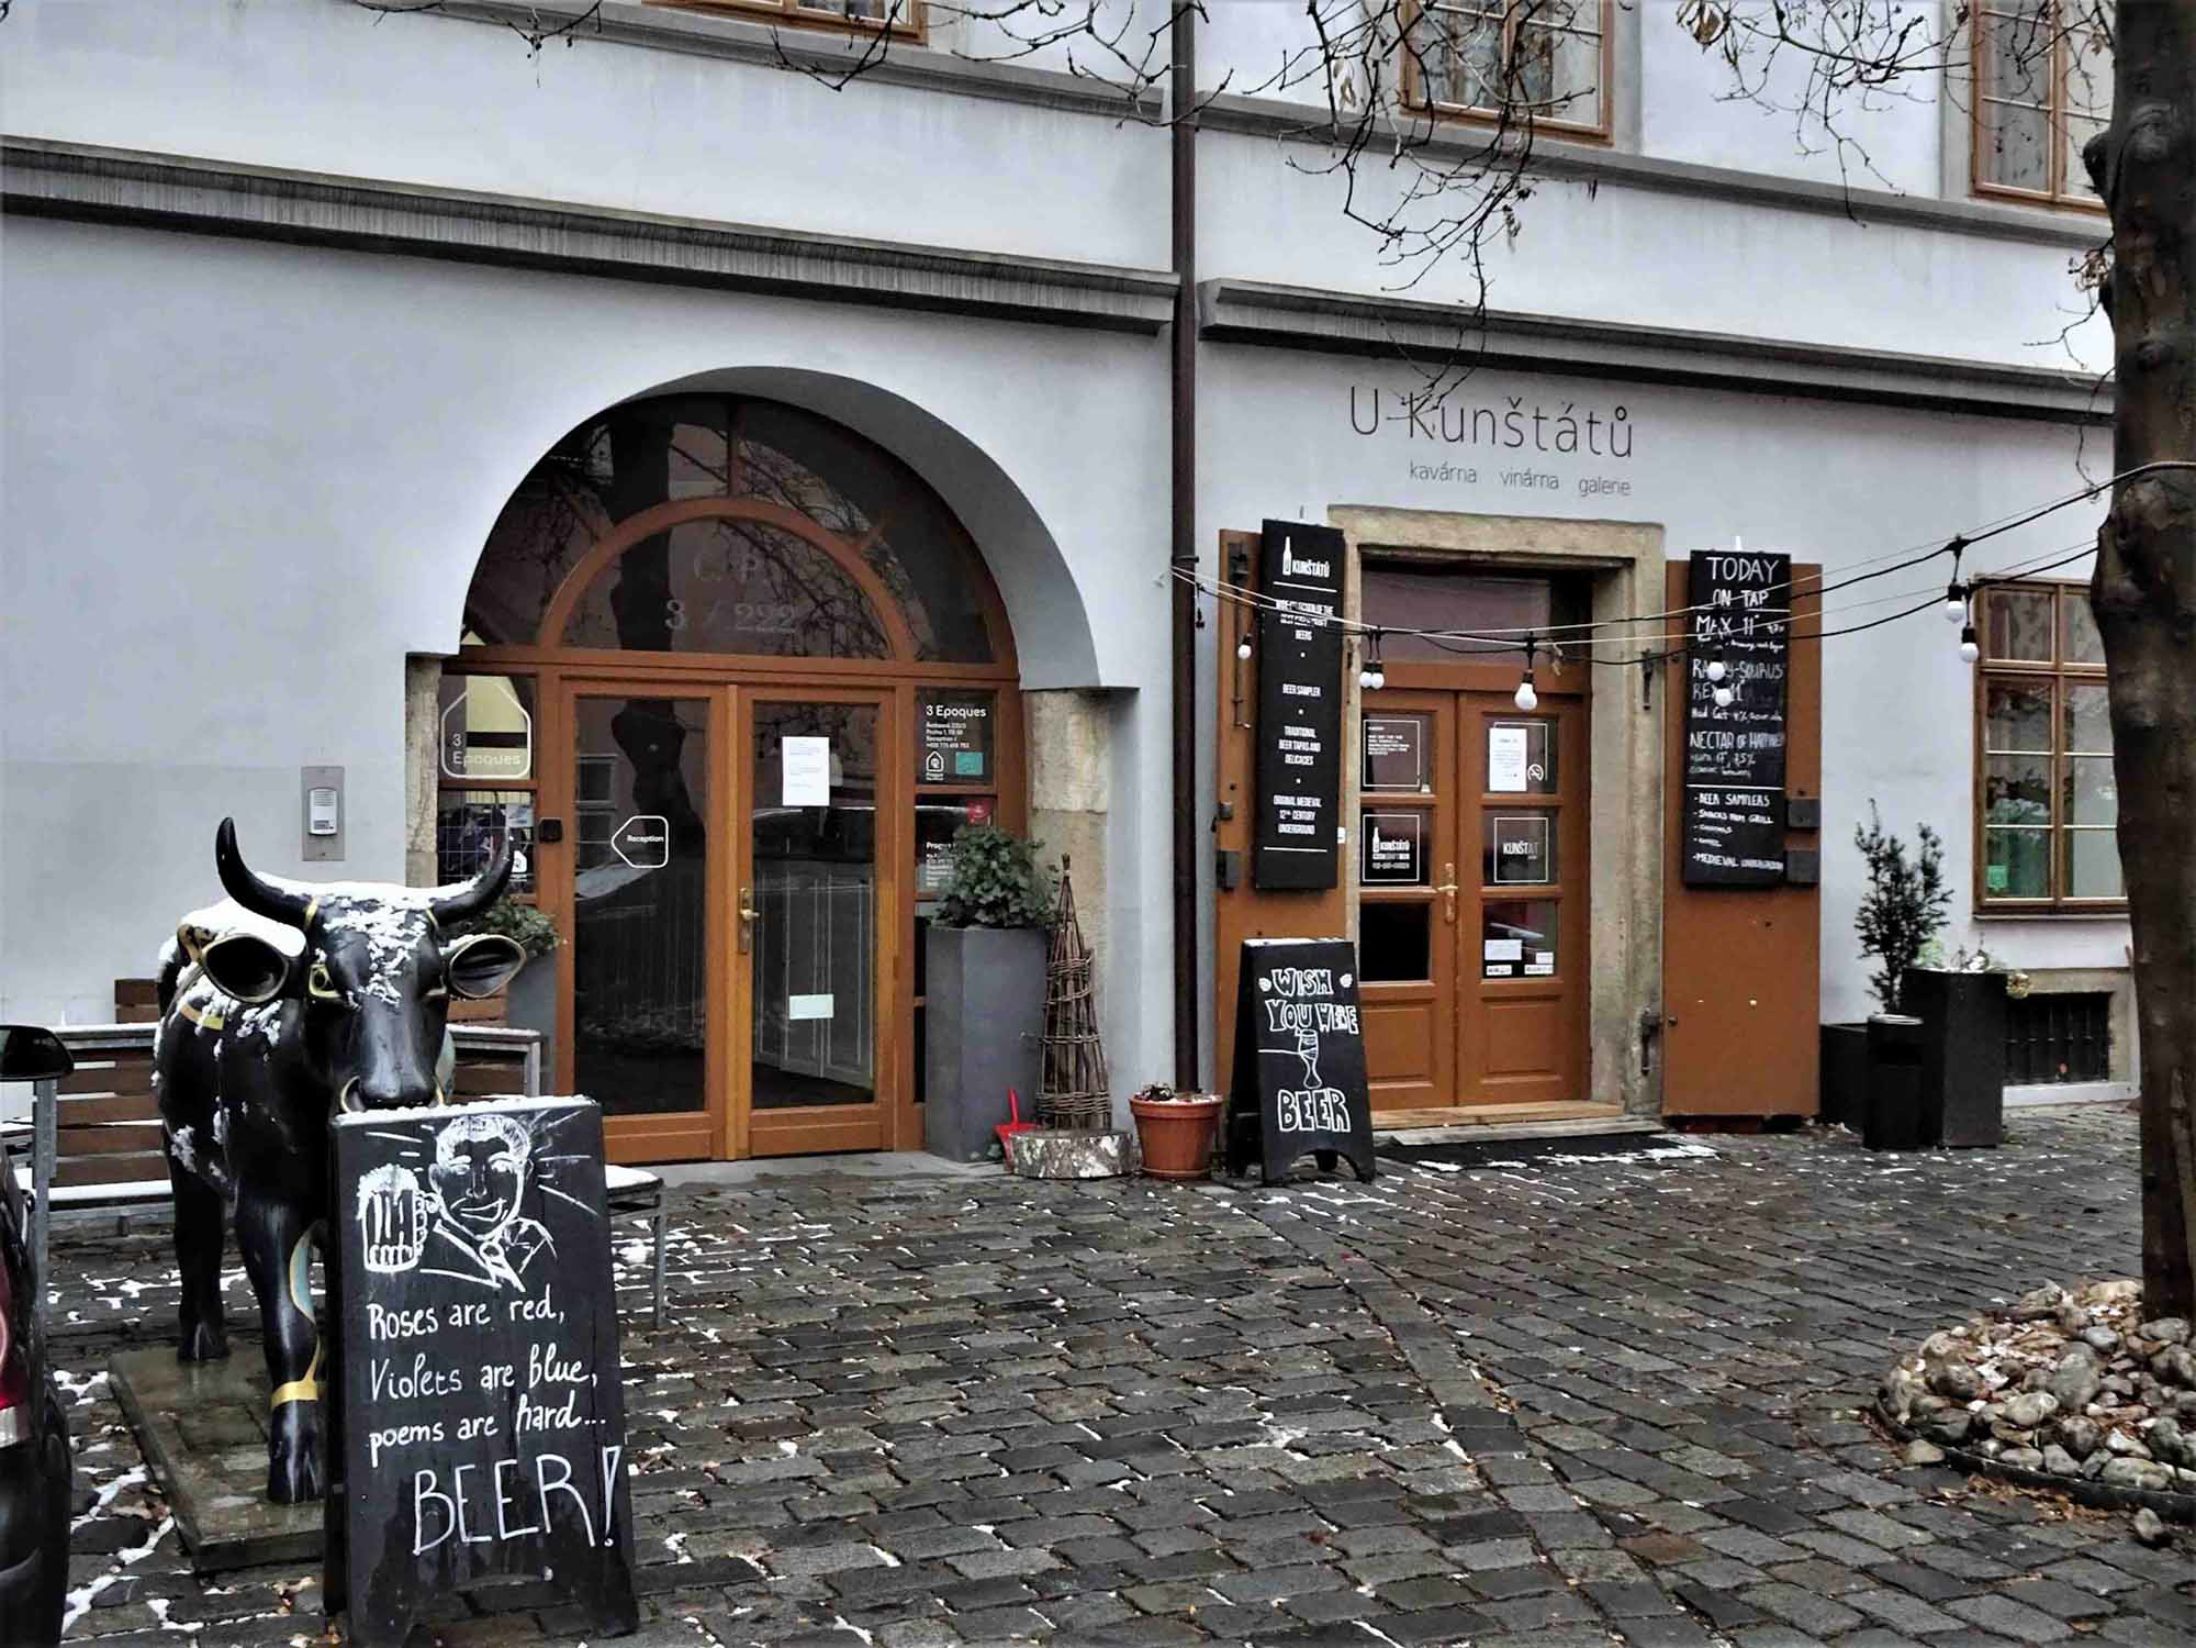 U Kunštátů - Best Pubs in Prague